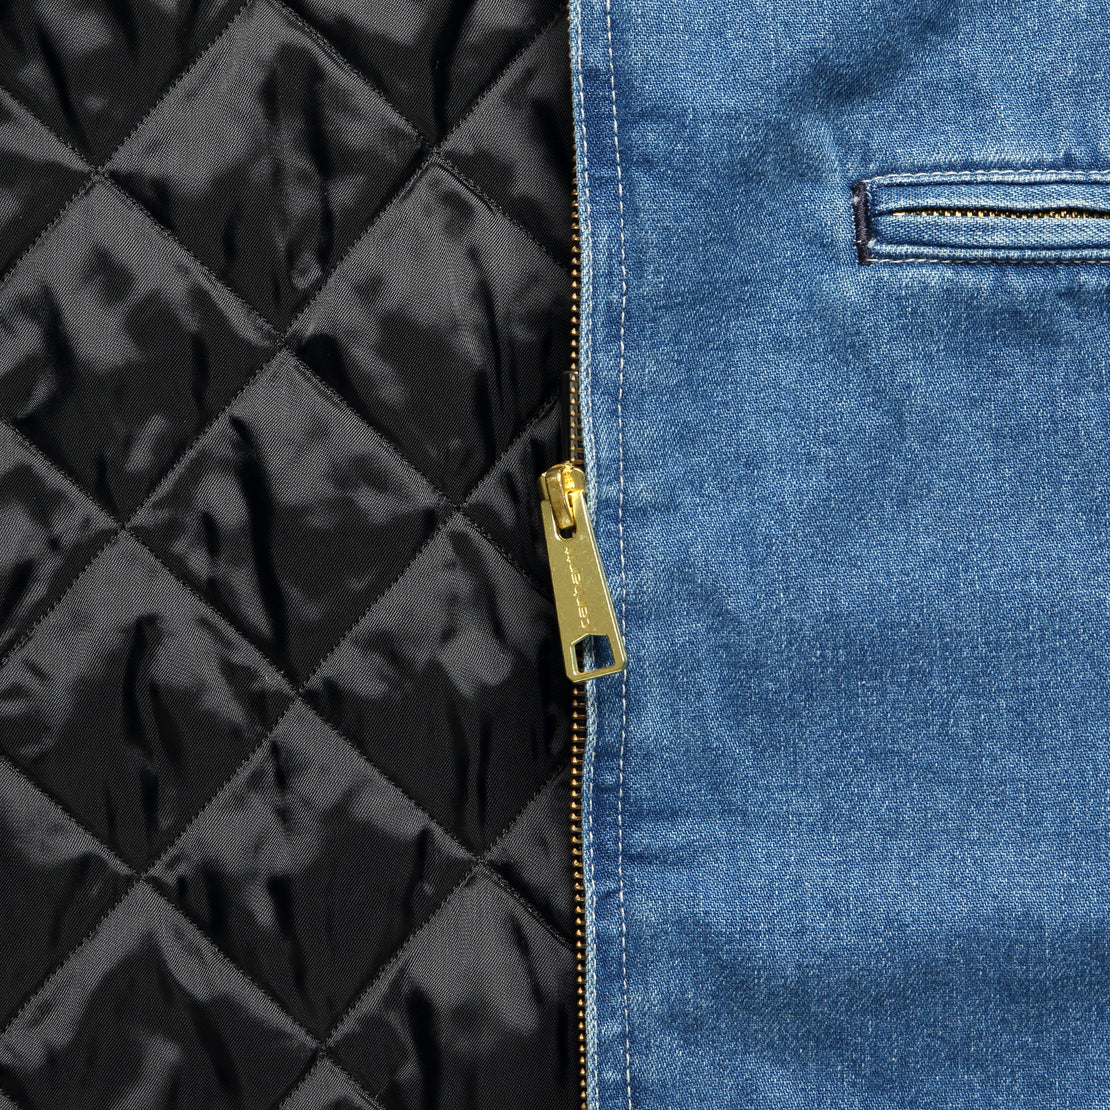 OG Detroit Jacket - Stonewashed Blue - Carhartt WIP - STAG Provisions - Outerwear - Coat / Jacket